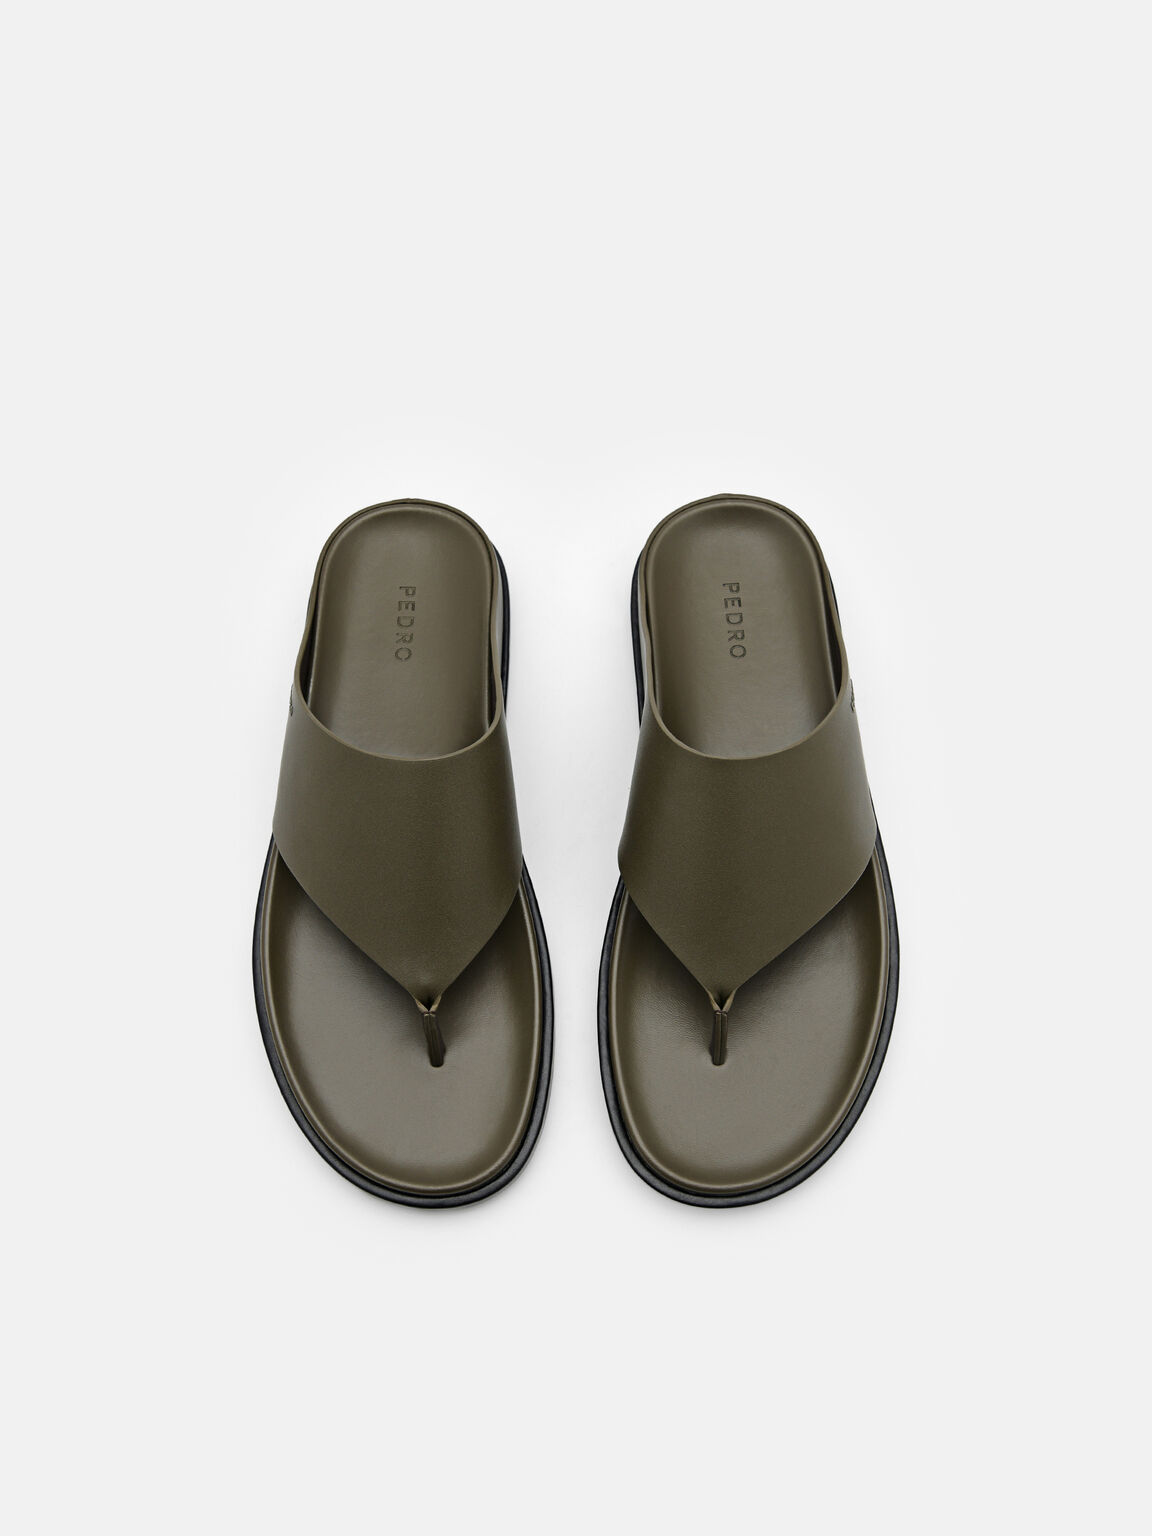 Microfiber Thong Sandals, Olive